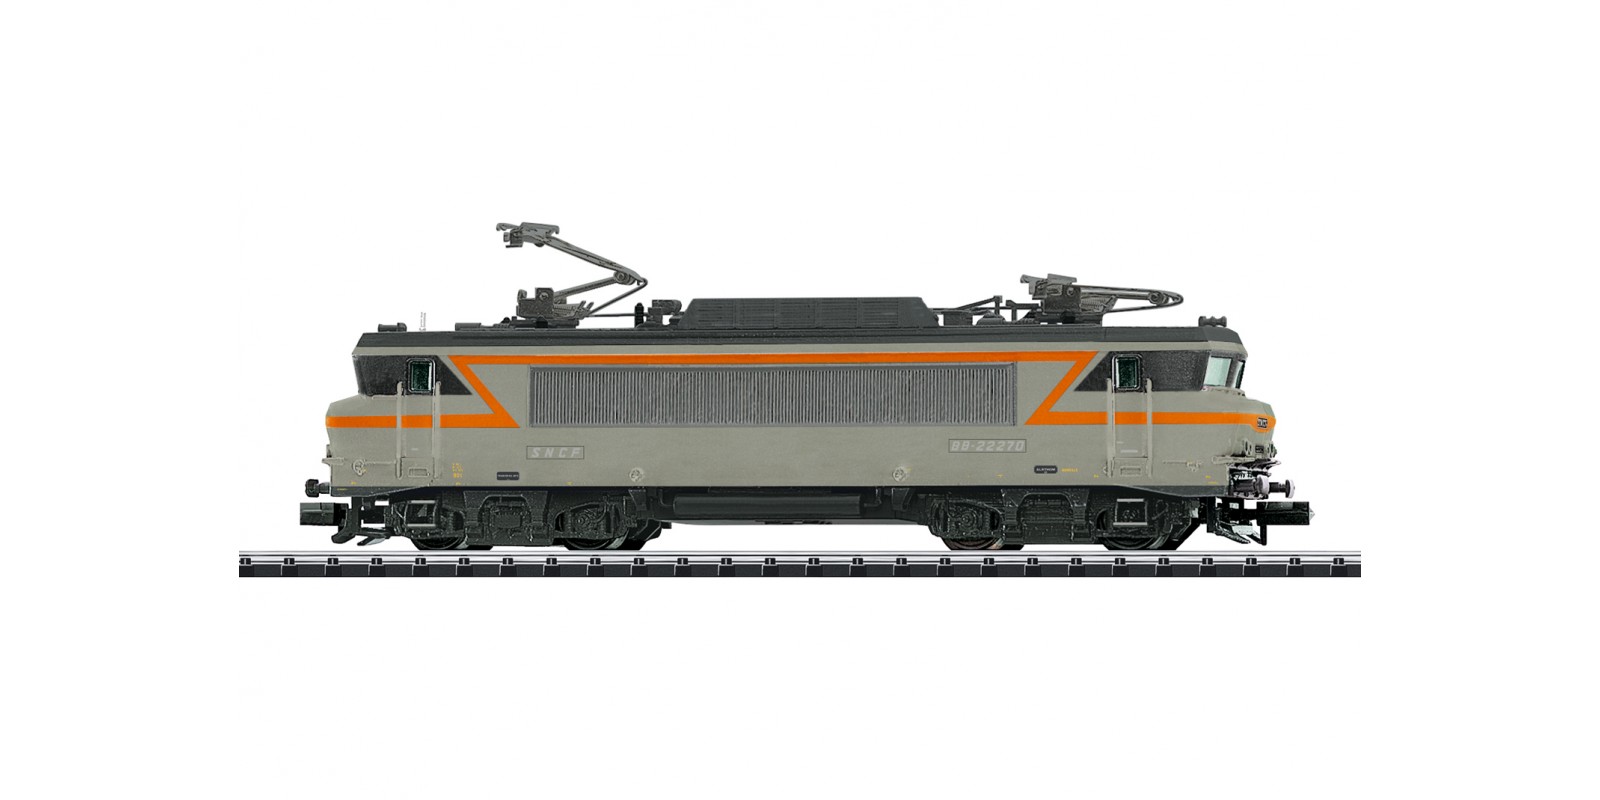 T16005 Class BB 22200 Electric Locomotive